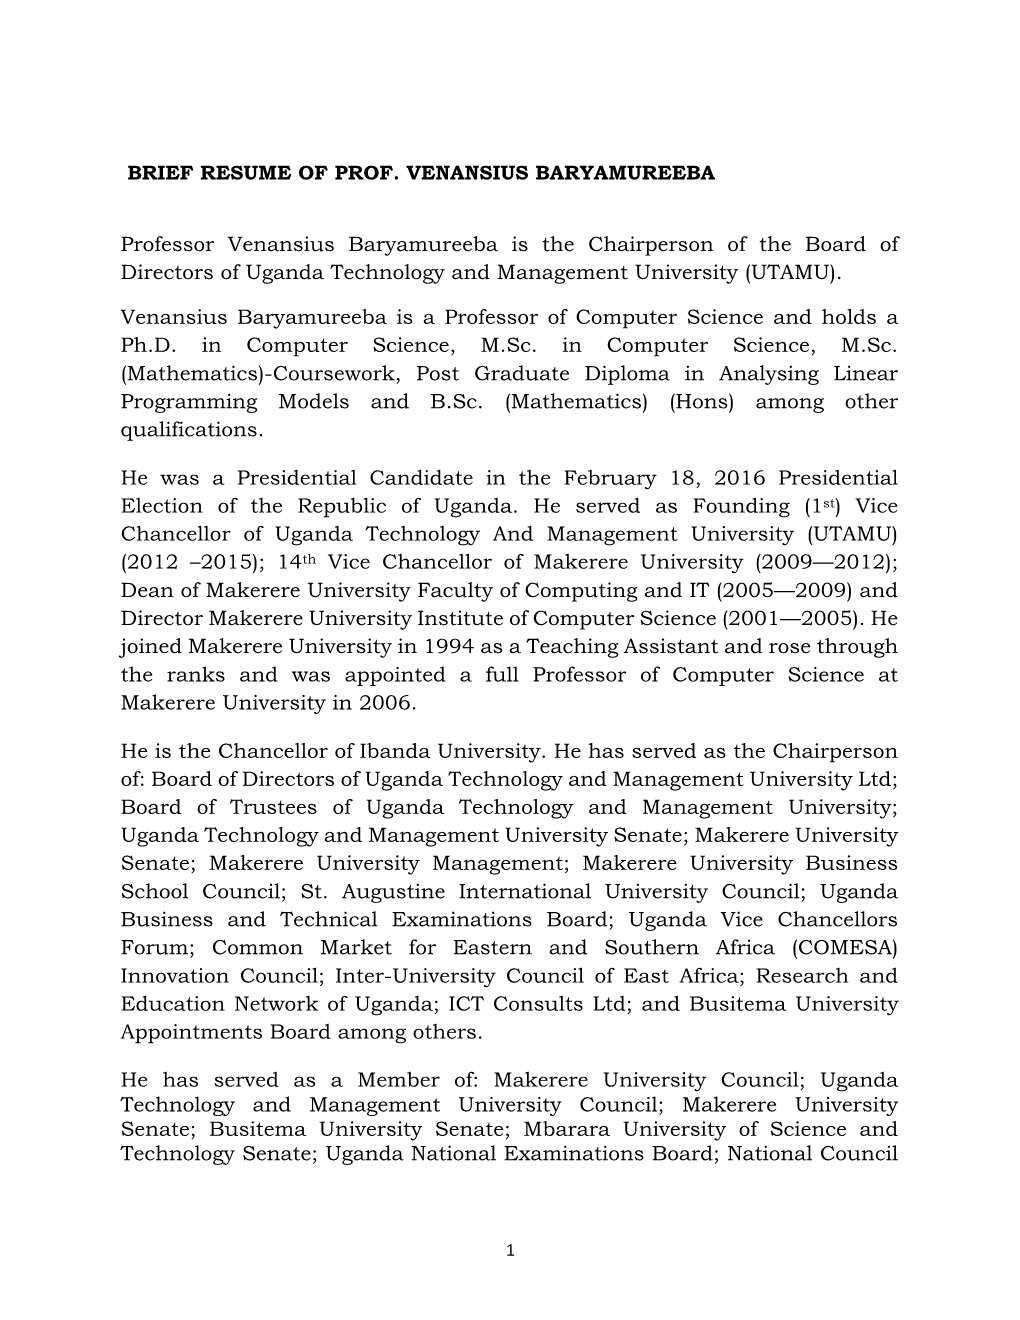 Brief Resume of Prof. Venansius Baryamureeba